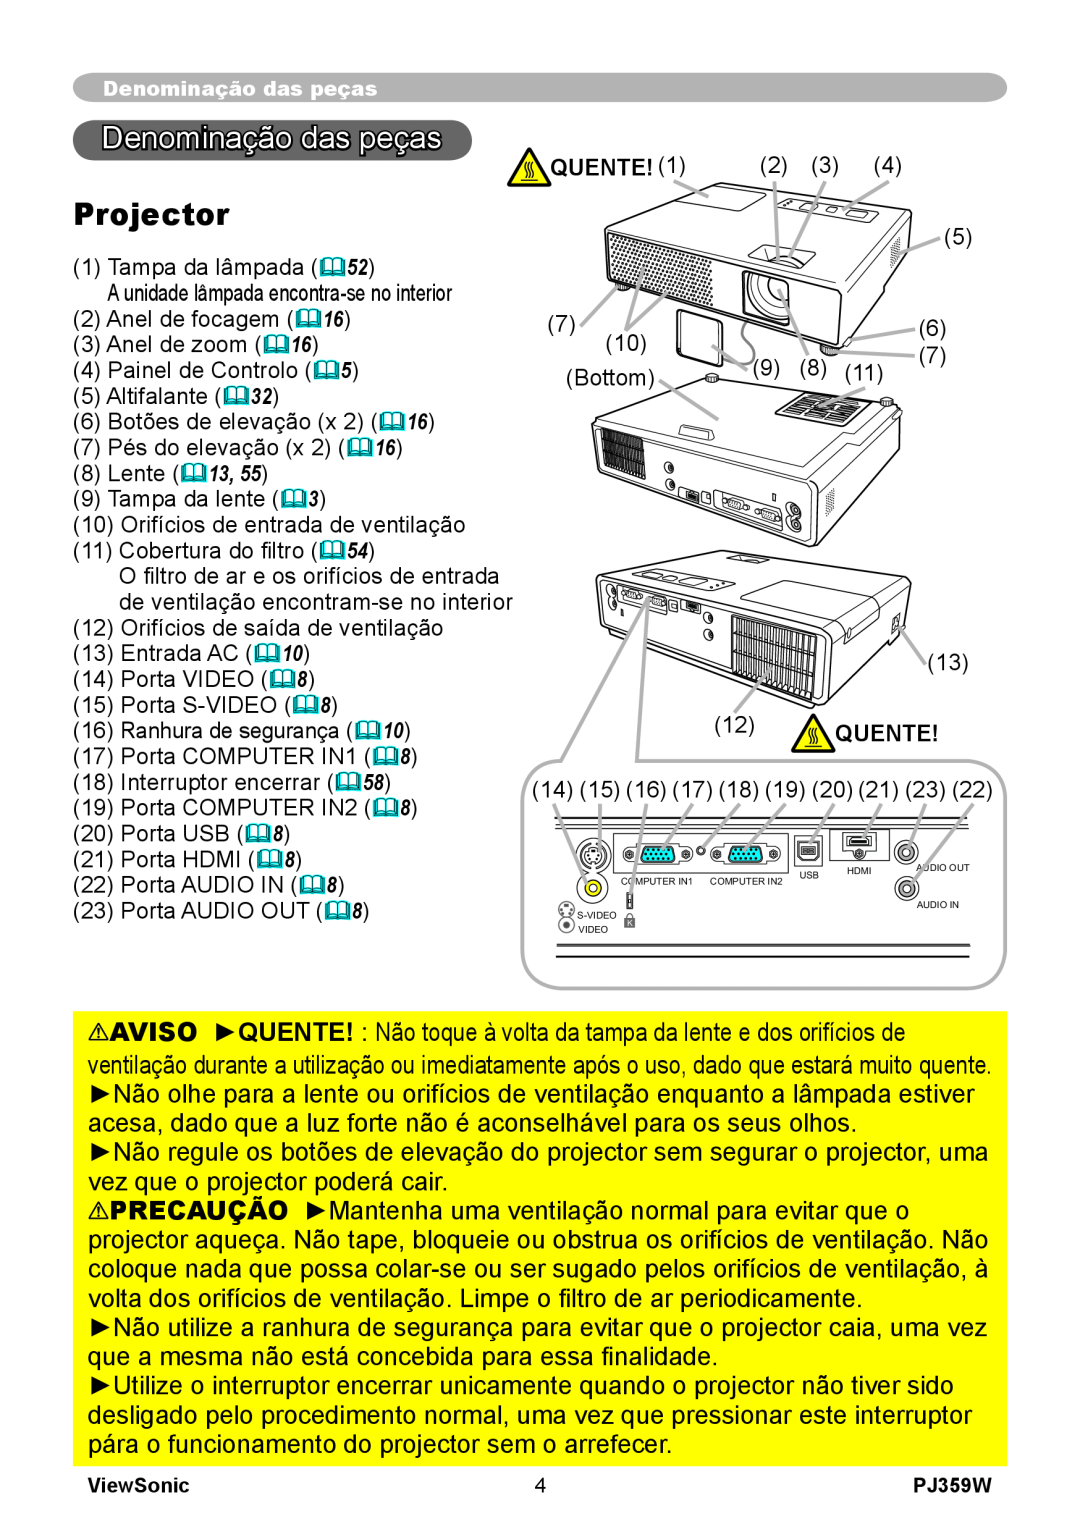 ViewSonic PJ359 manual Denominação das peças, Projector 